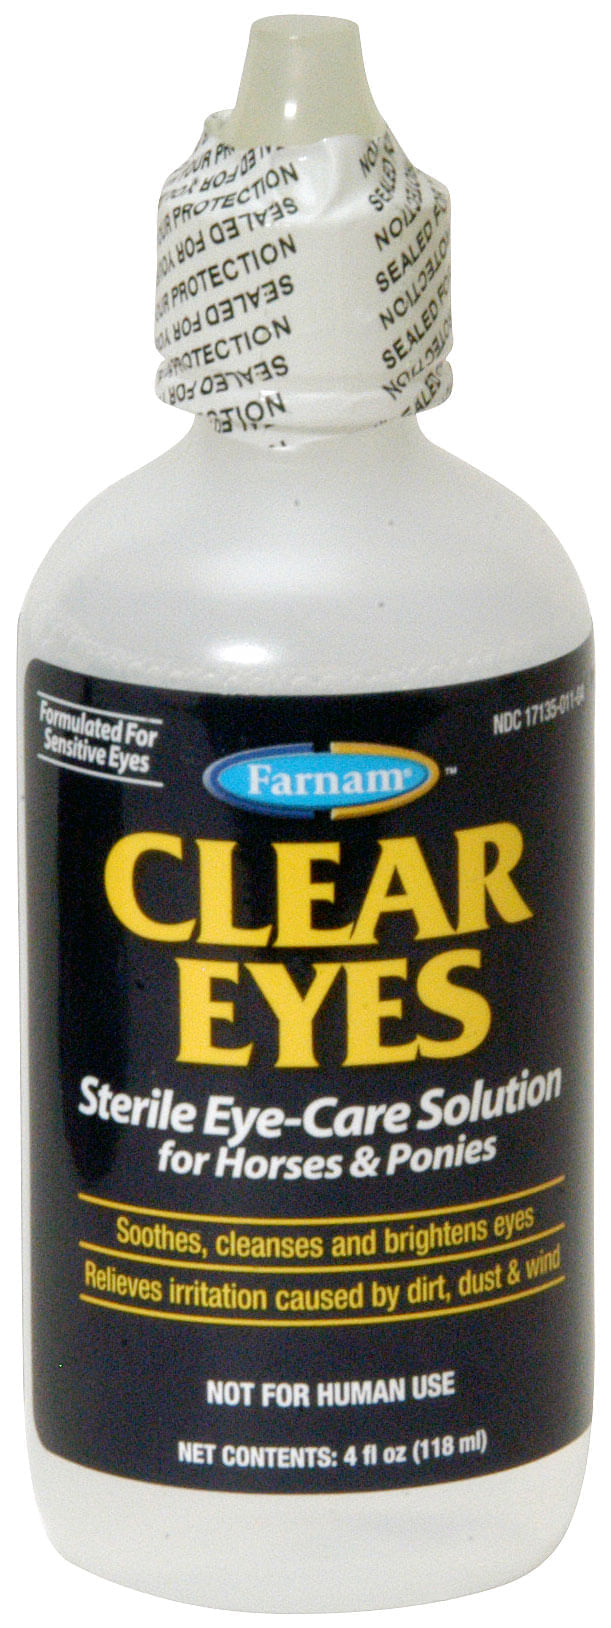 Clear Eyes Sterile Eye-Care Solution, 4 oz - Jeffers